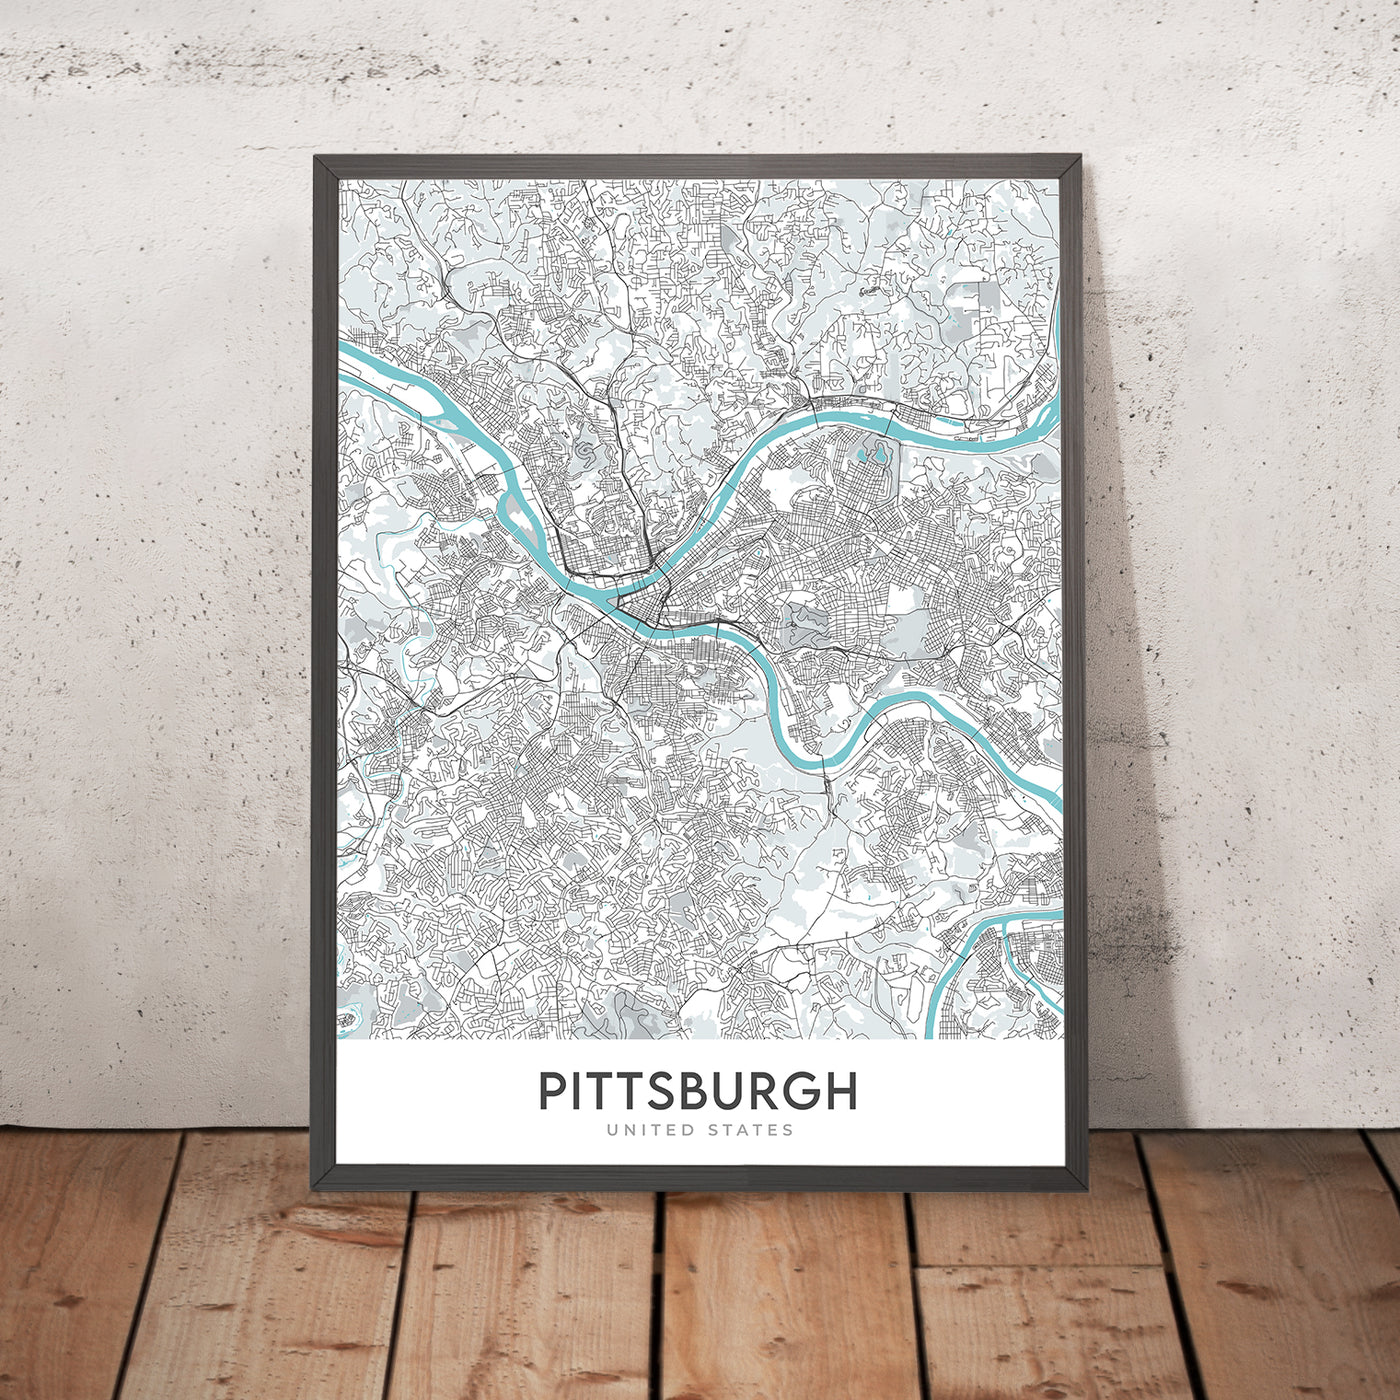 Mapa moderno de la ciudad de Pittsburgh, PA: centro, Oakland, PNC Park, Heinz Field, Carnegie Museum